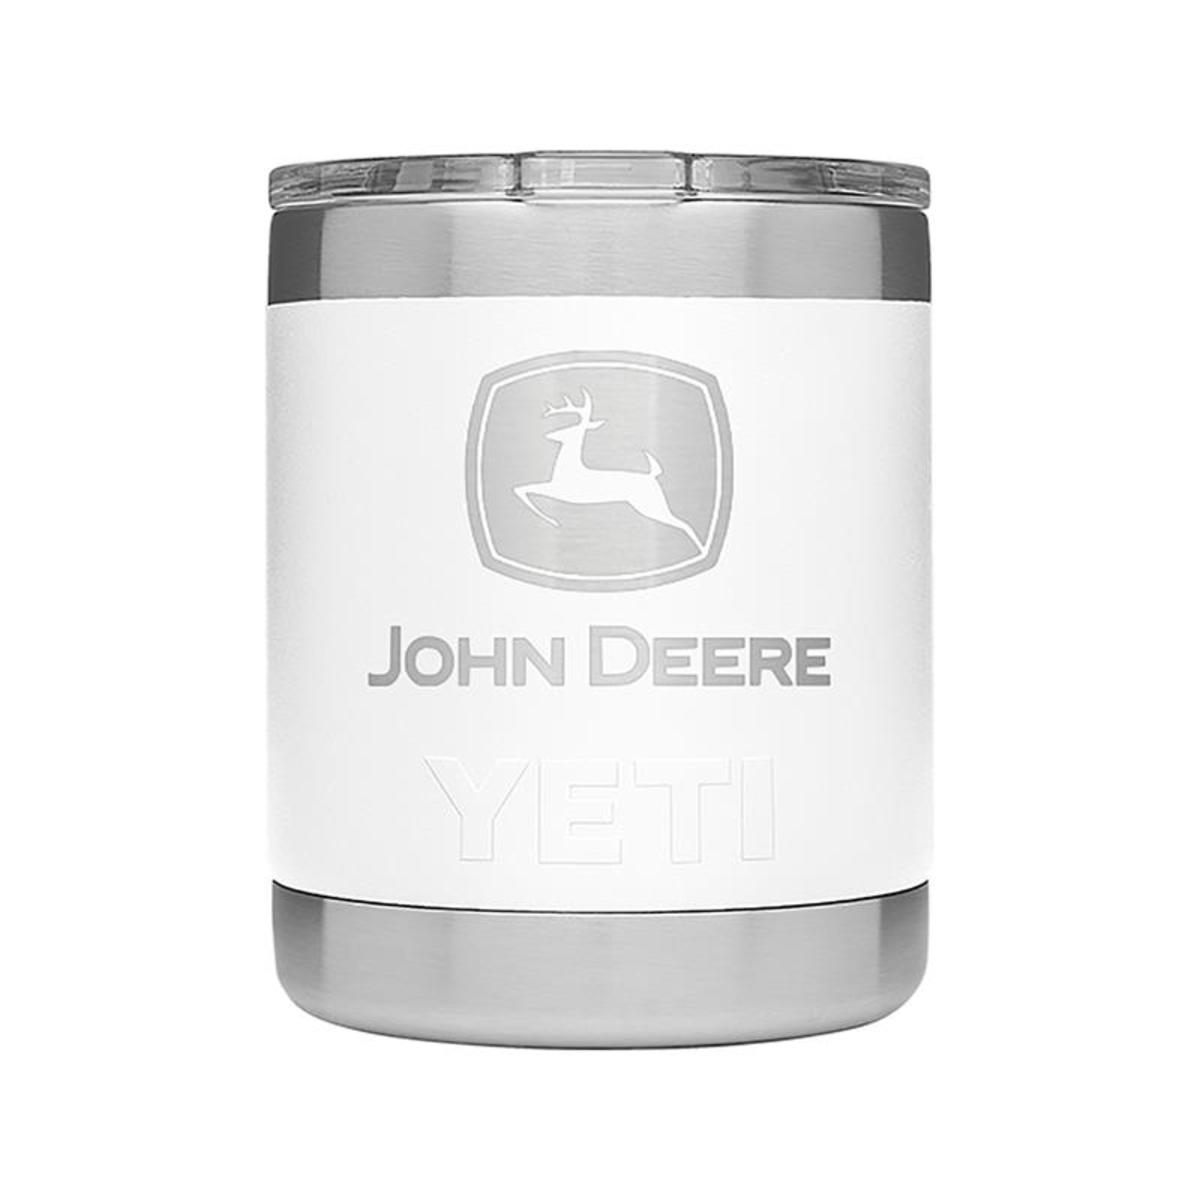 John Deere Yeti Limited Edition 30-oz Tumbler - LP82755